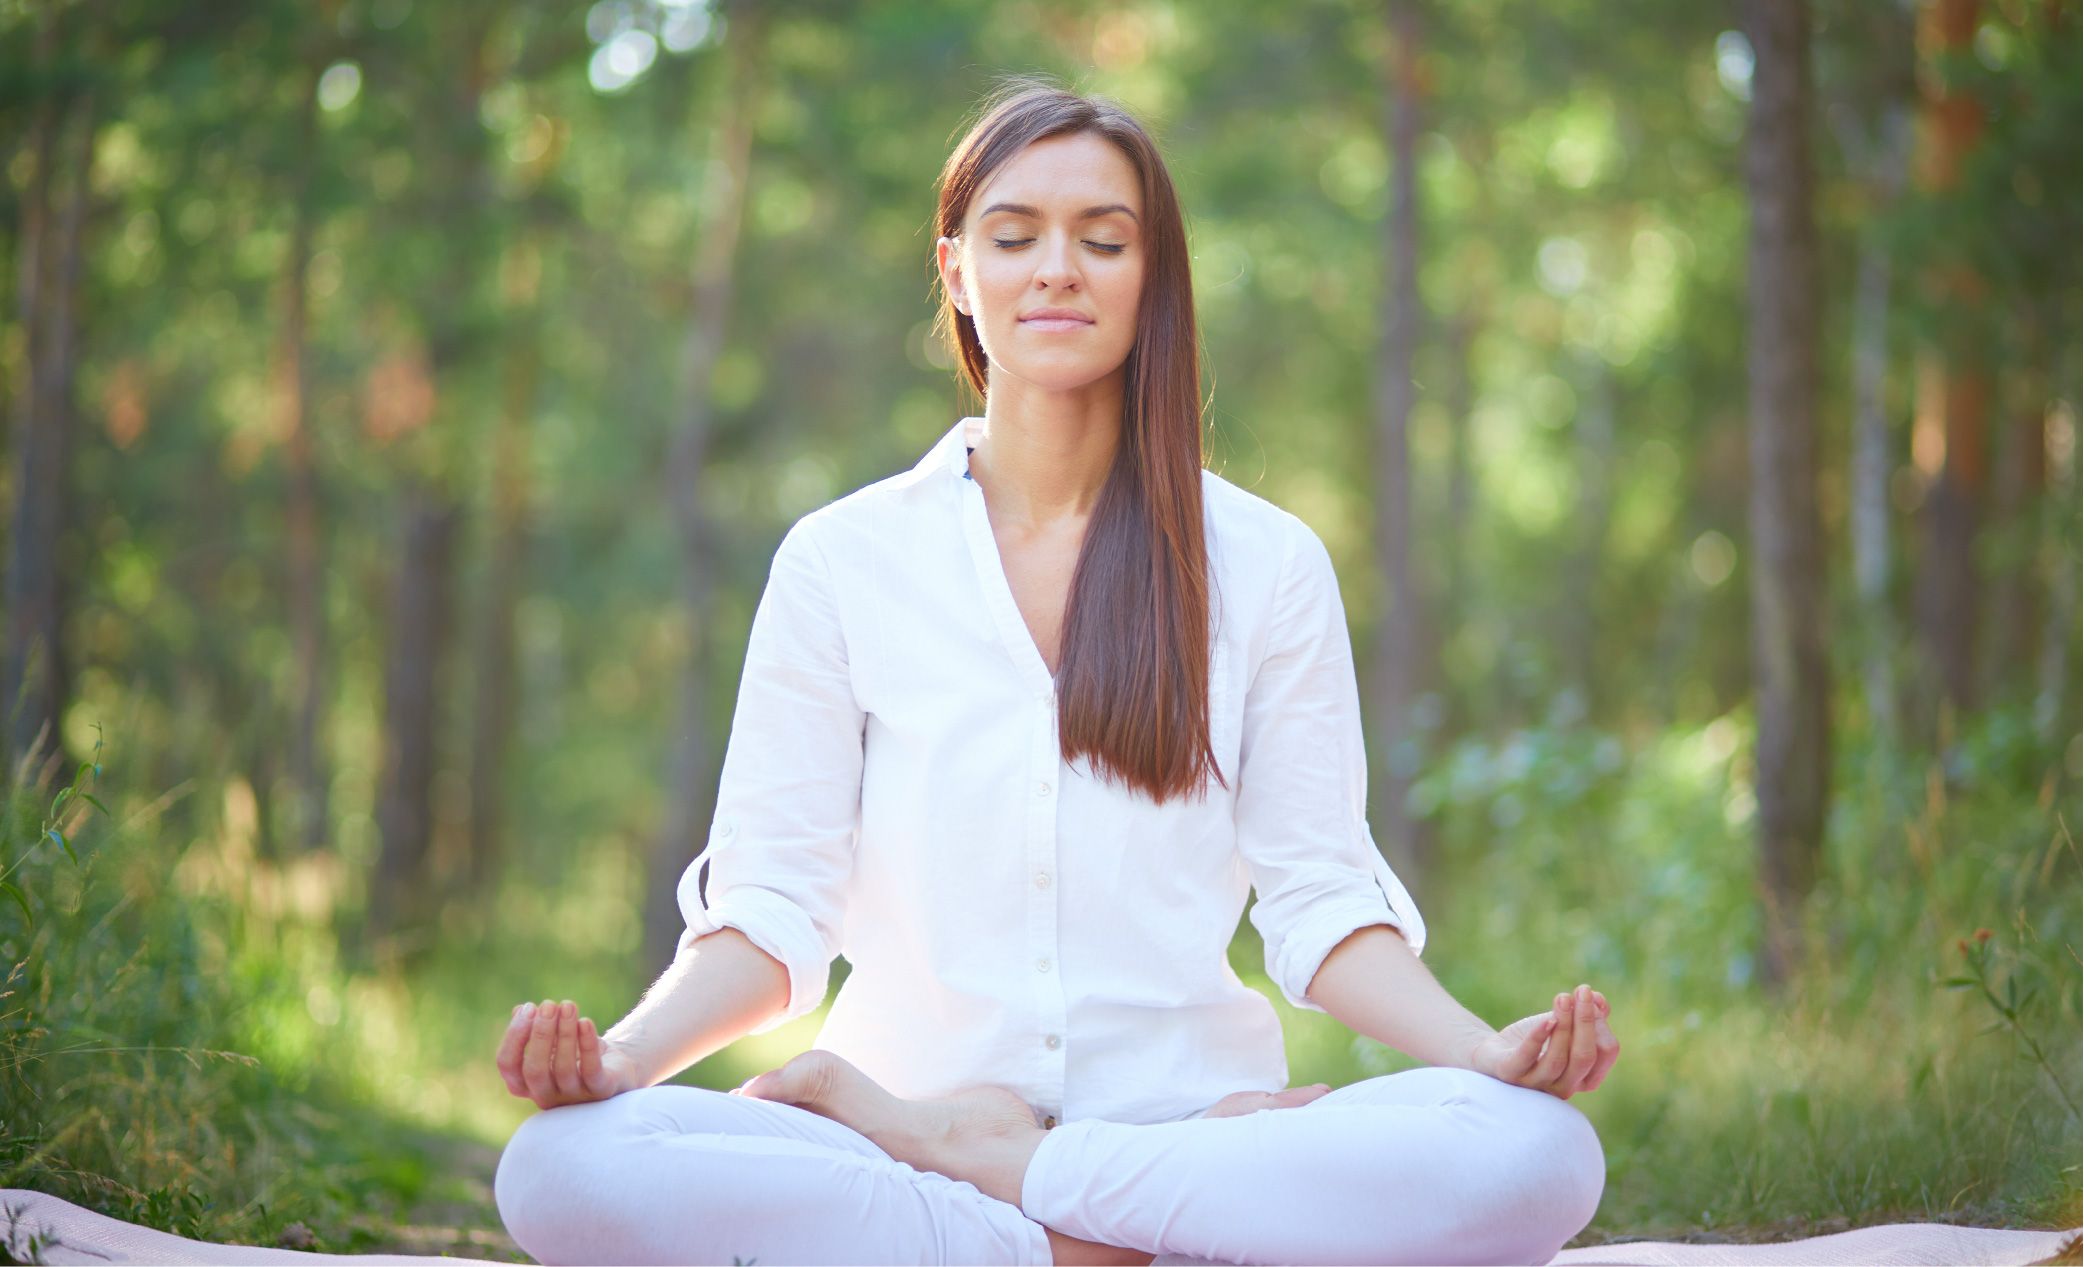 yoga and meditation - anxiety disorder treatment 